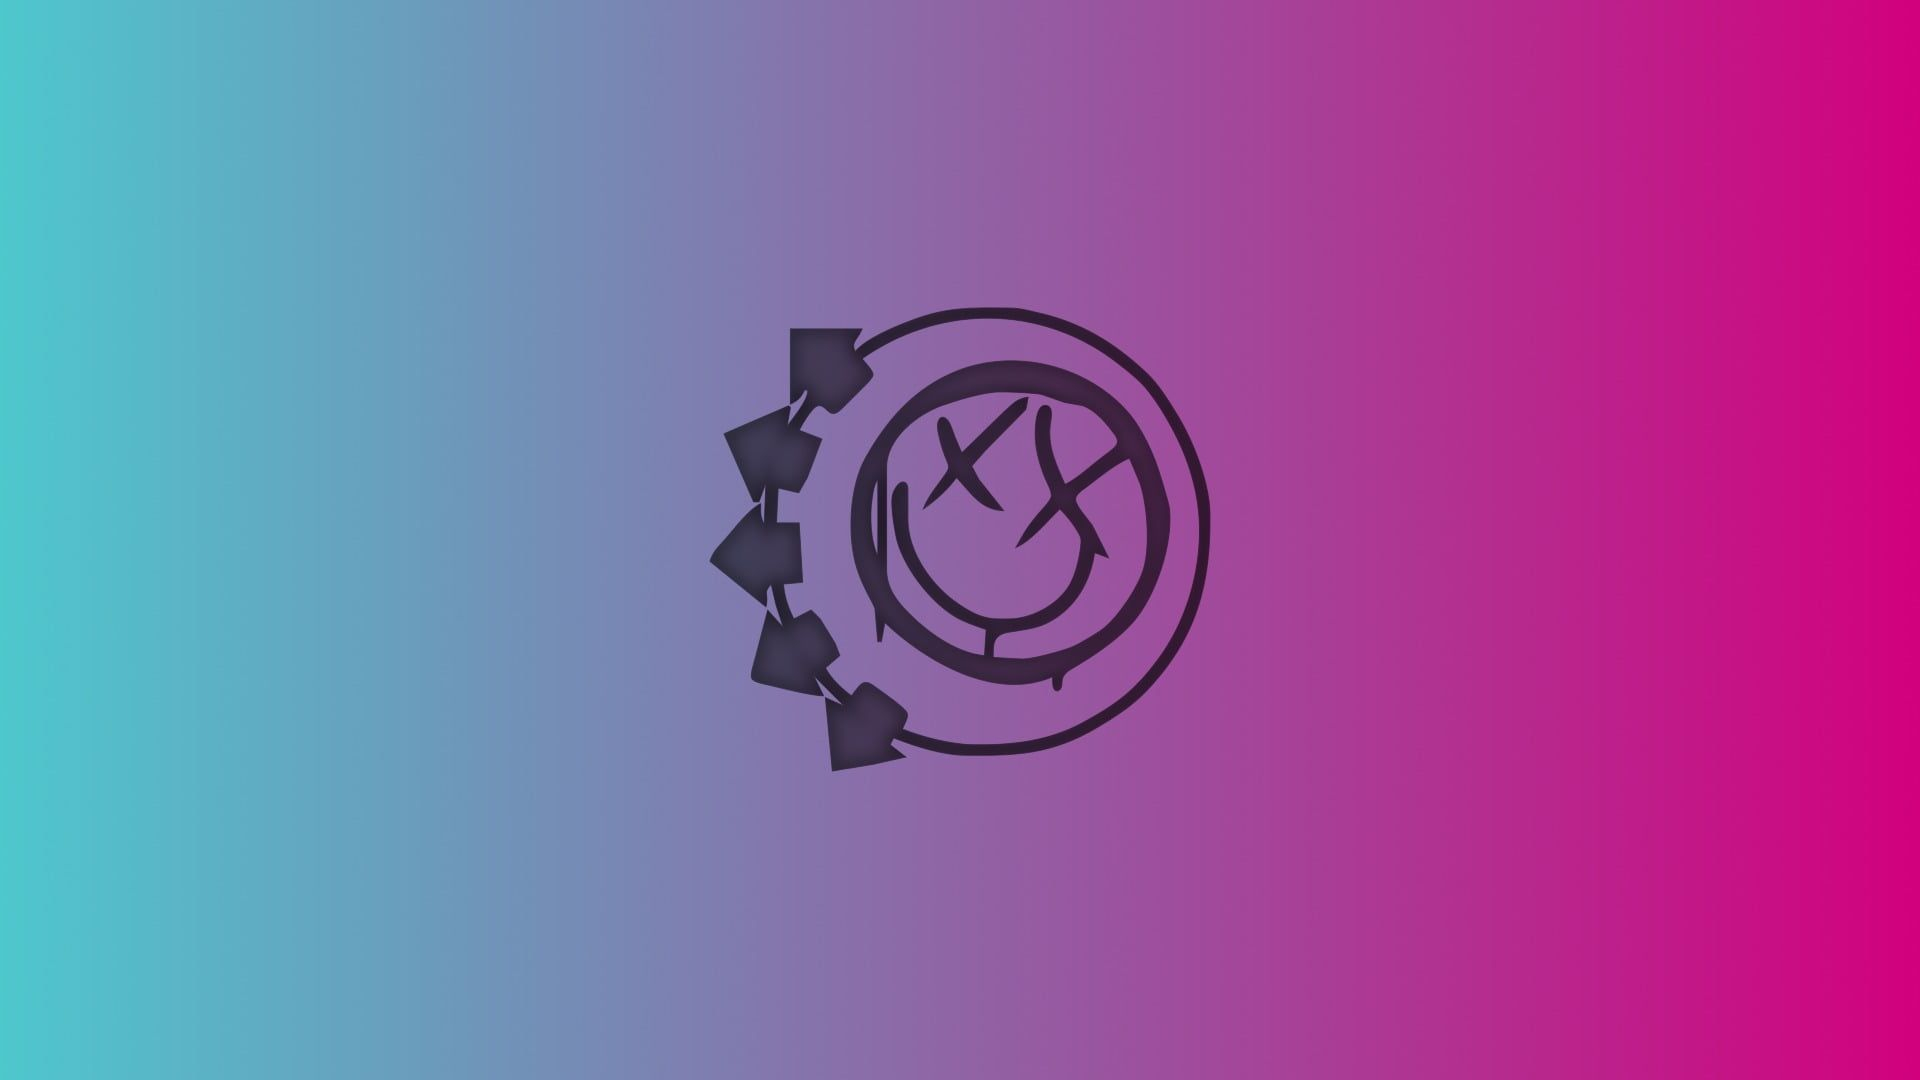 1920x1080 Nirvana logo #pink #blue #minimalism #Blink-182 #1080P #wallpaper #hdwallpaper #desktop | Blink 182 background, Blink 182 wallpaper, Blink 182